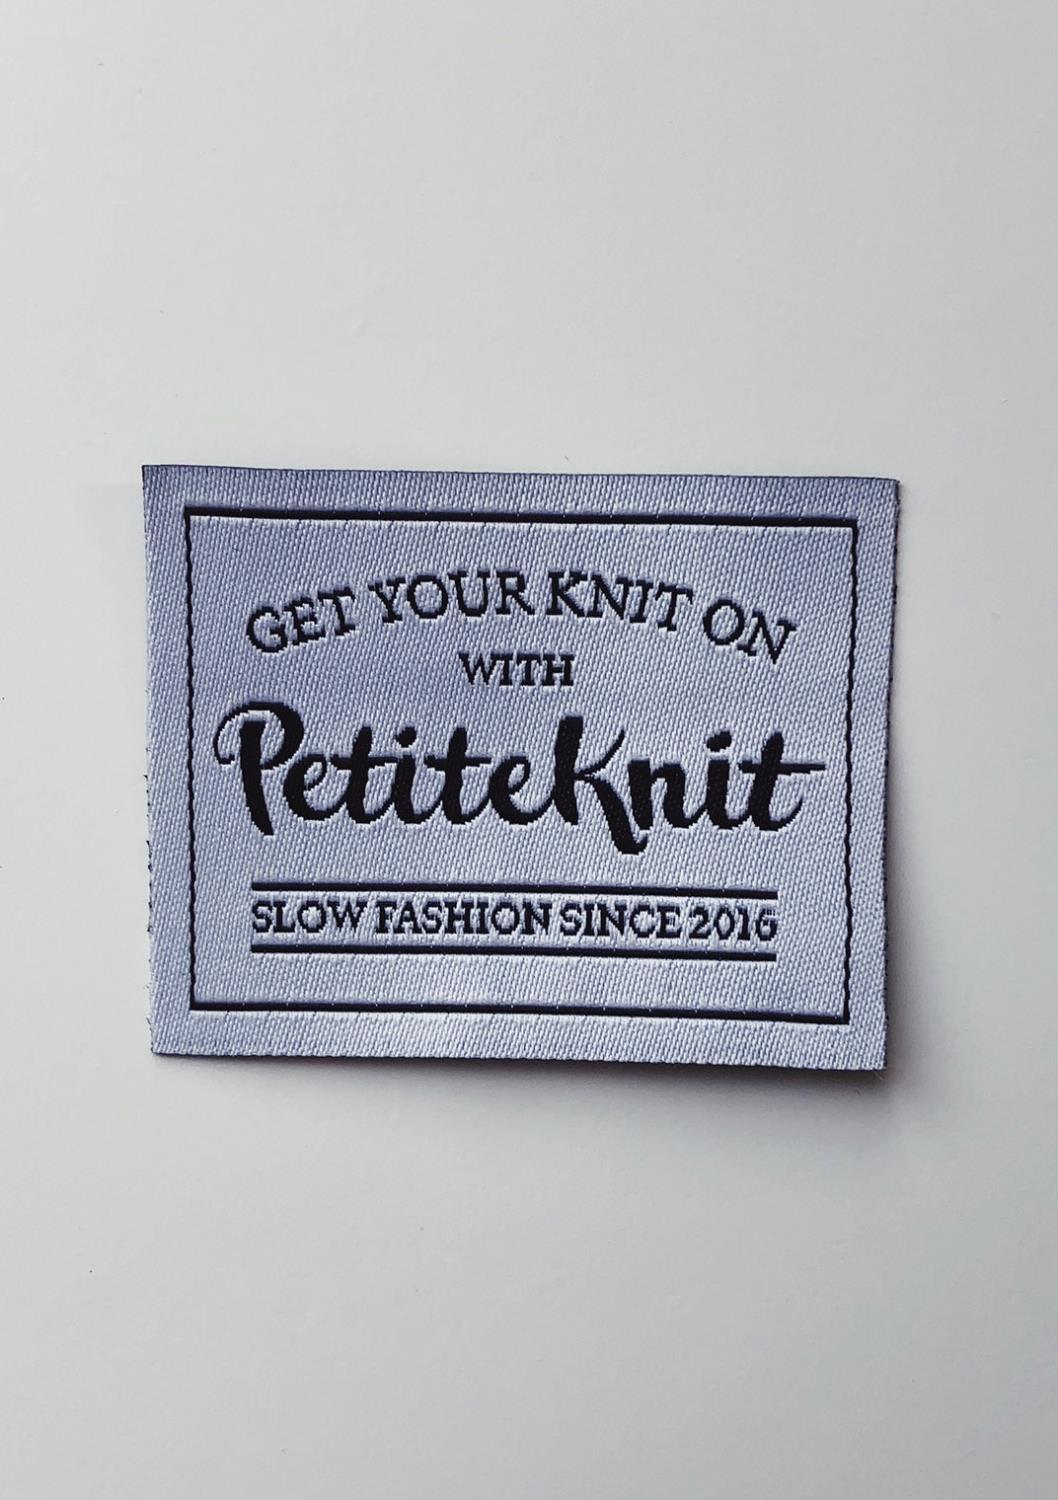 PETITE KNIT MERKELAPP Get Your Knit On With PK